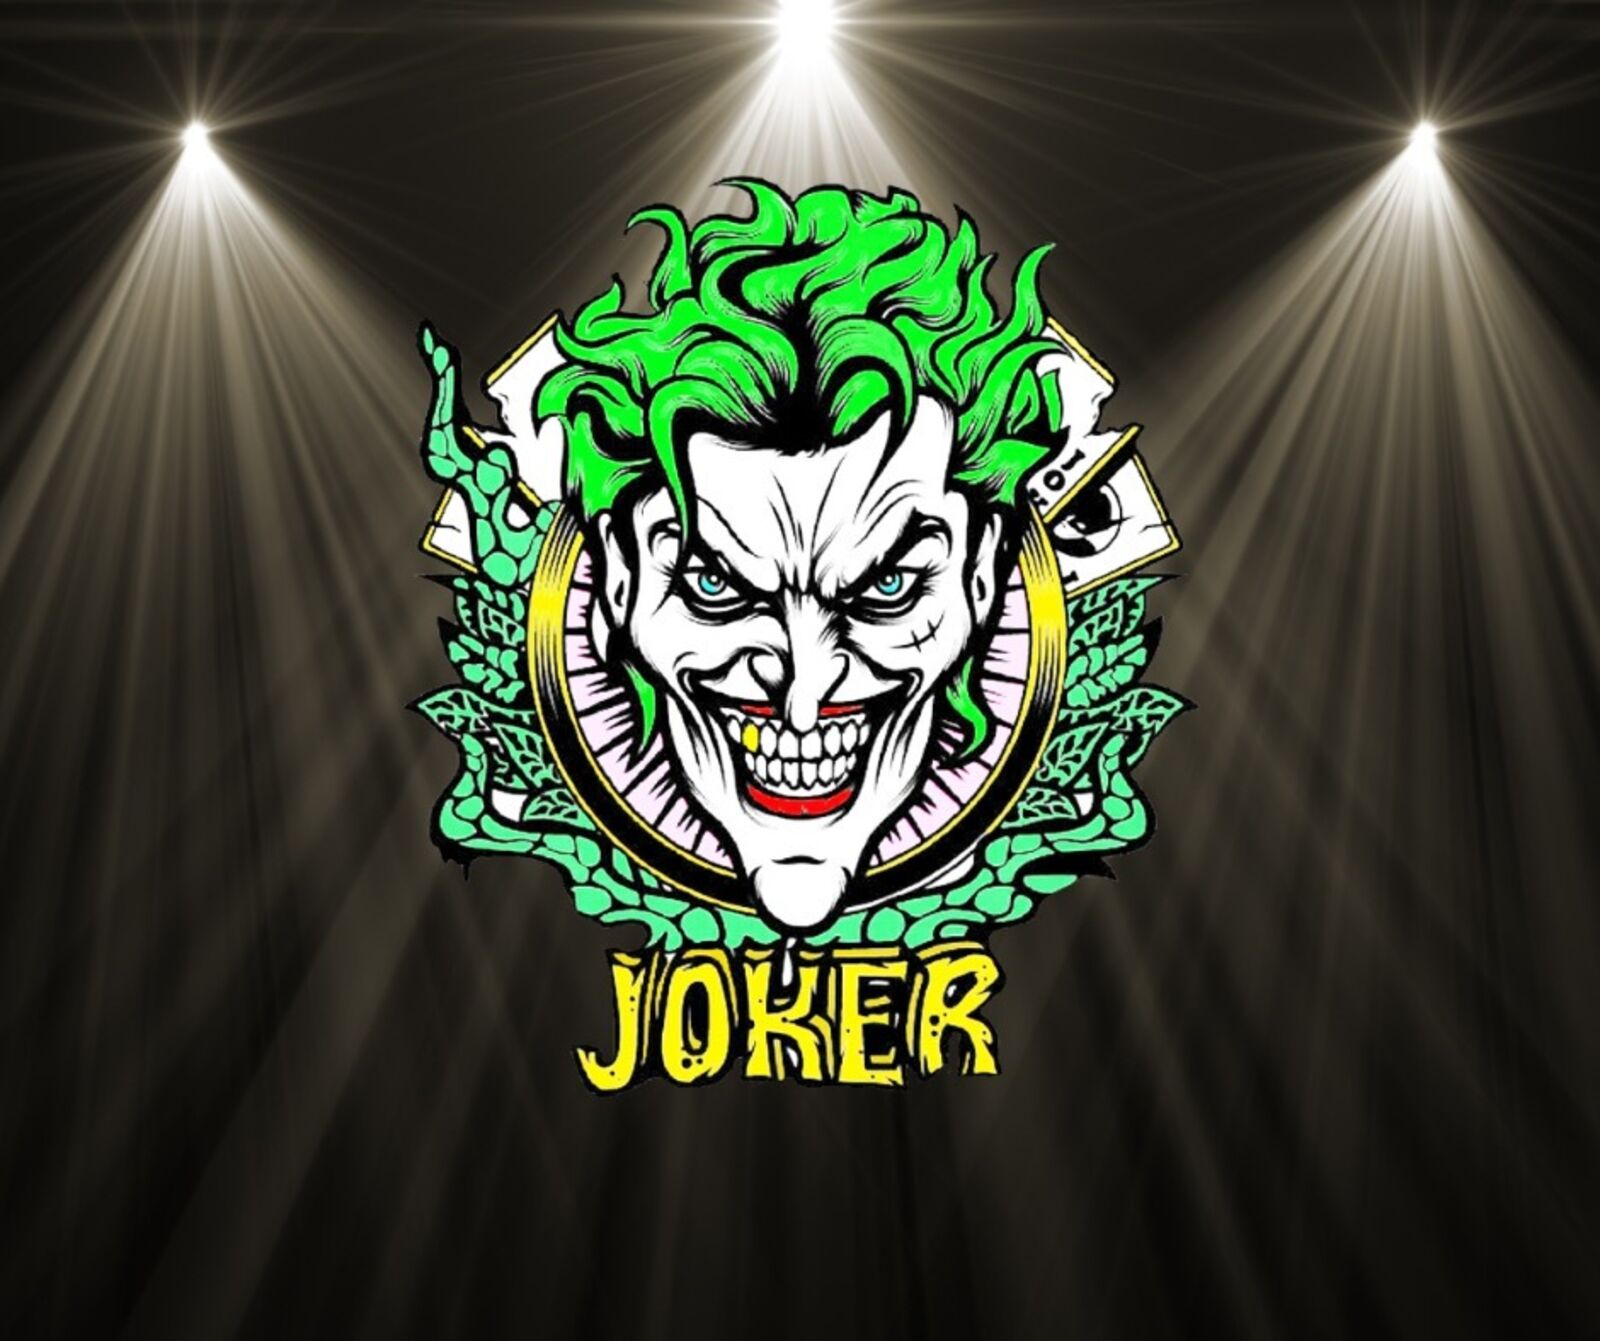 See 8.7k Joker promo contest profile